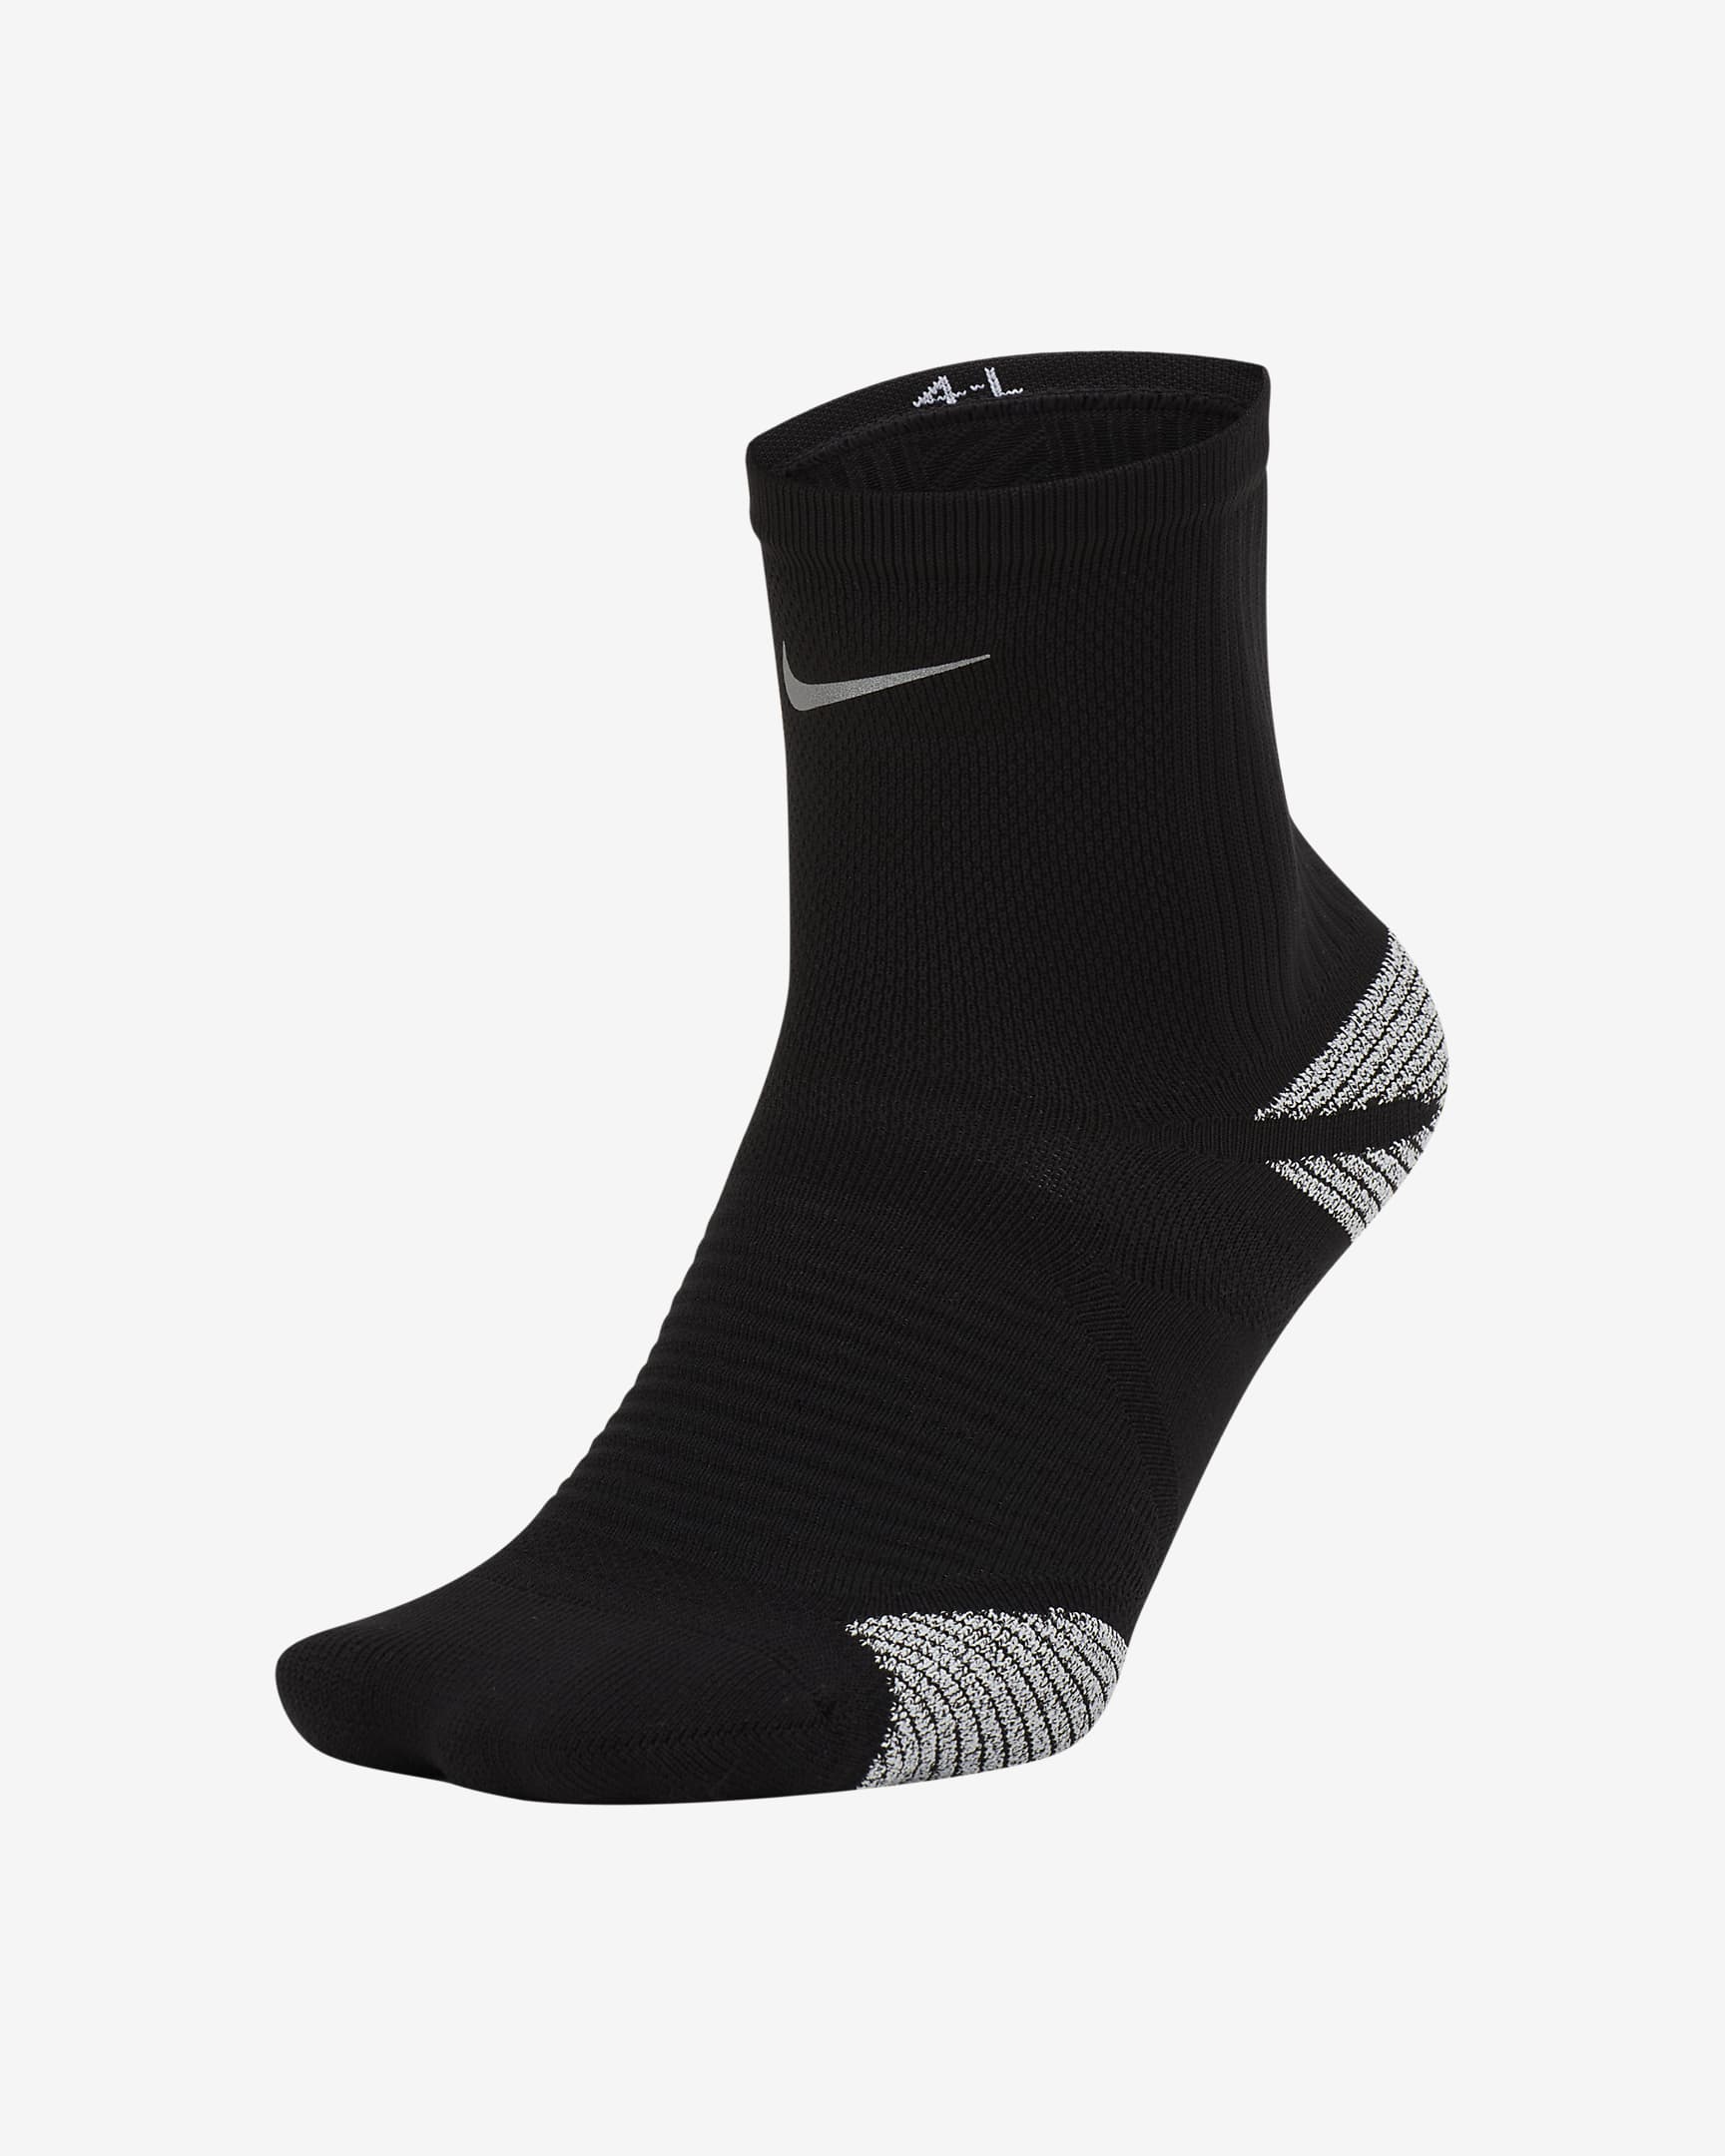 Nike Racing Ankle Socks - Black/Reflect Silver